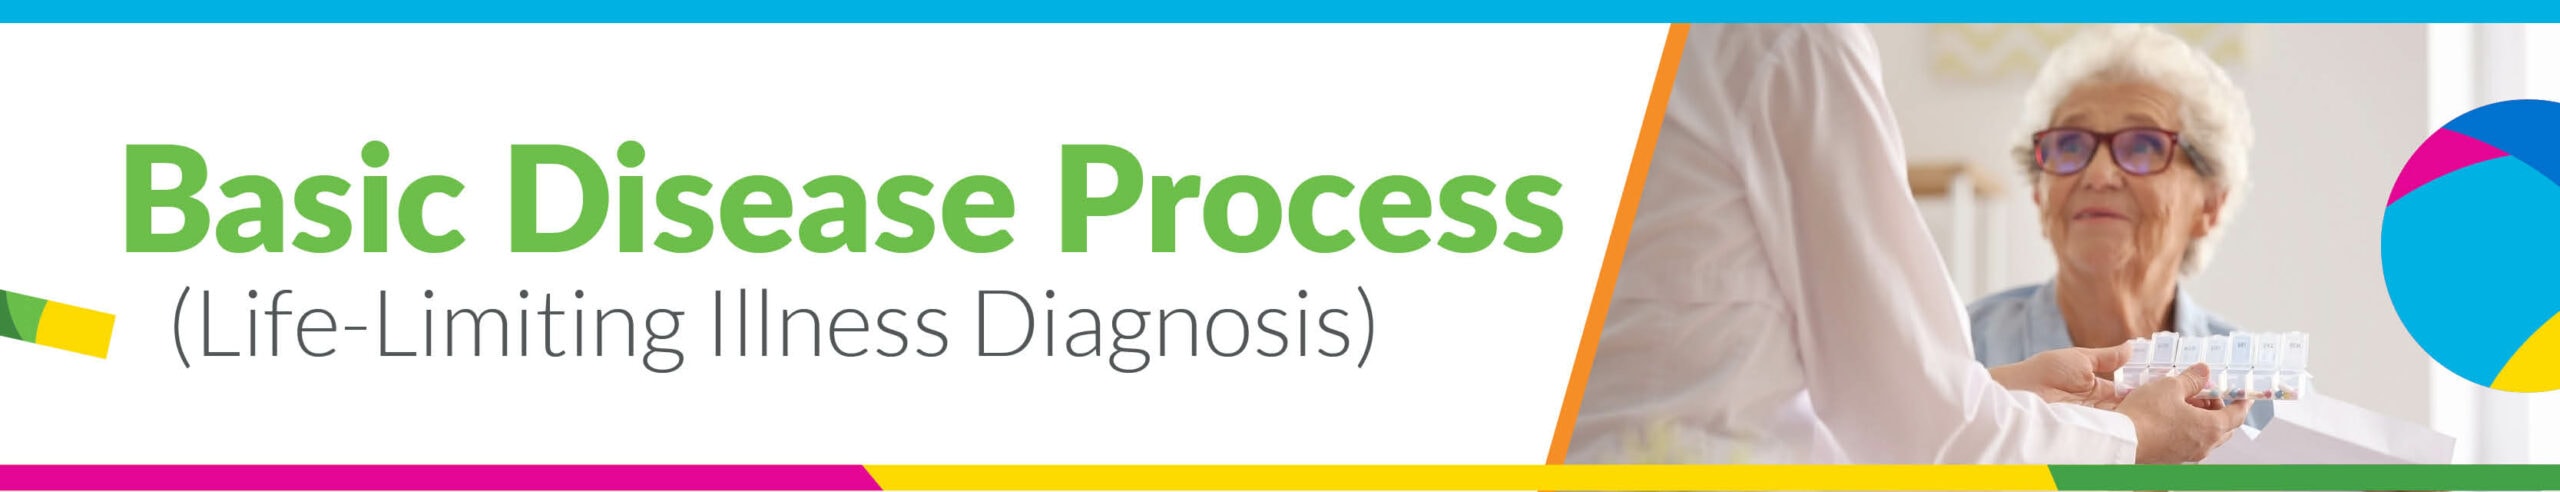 Basic Disease Process